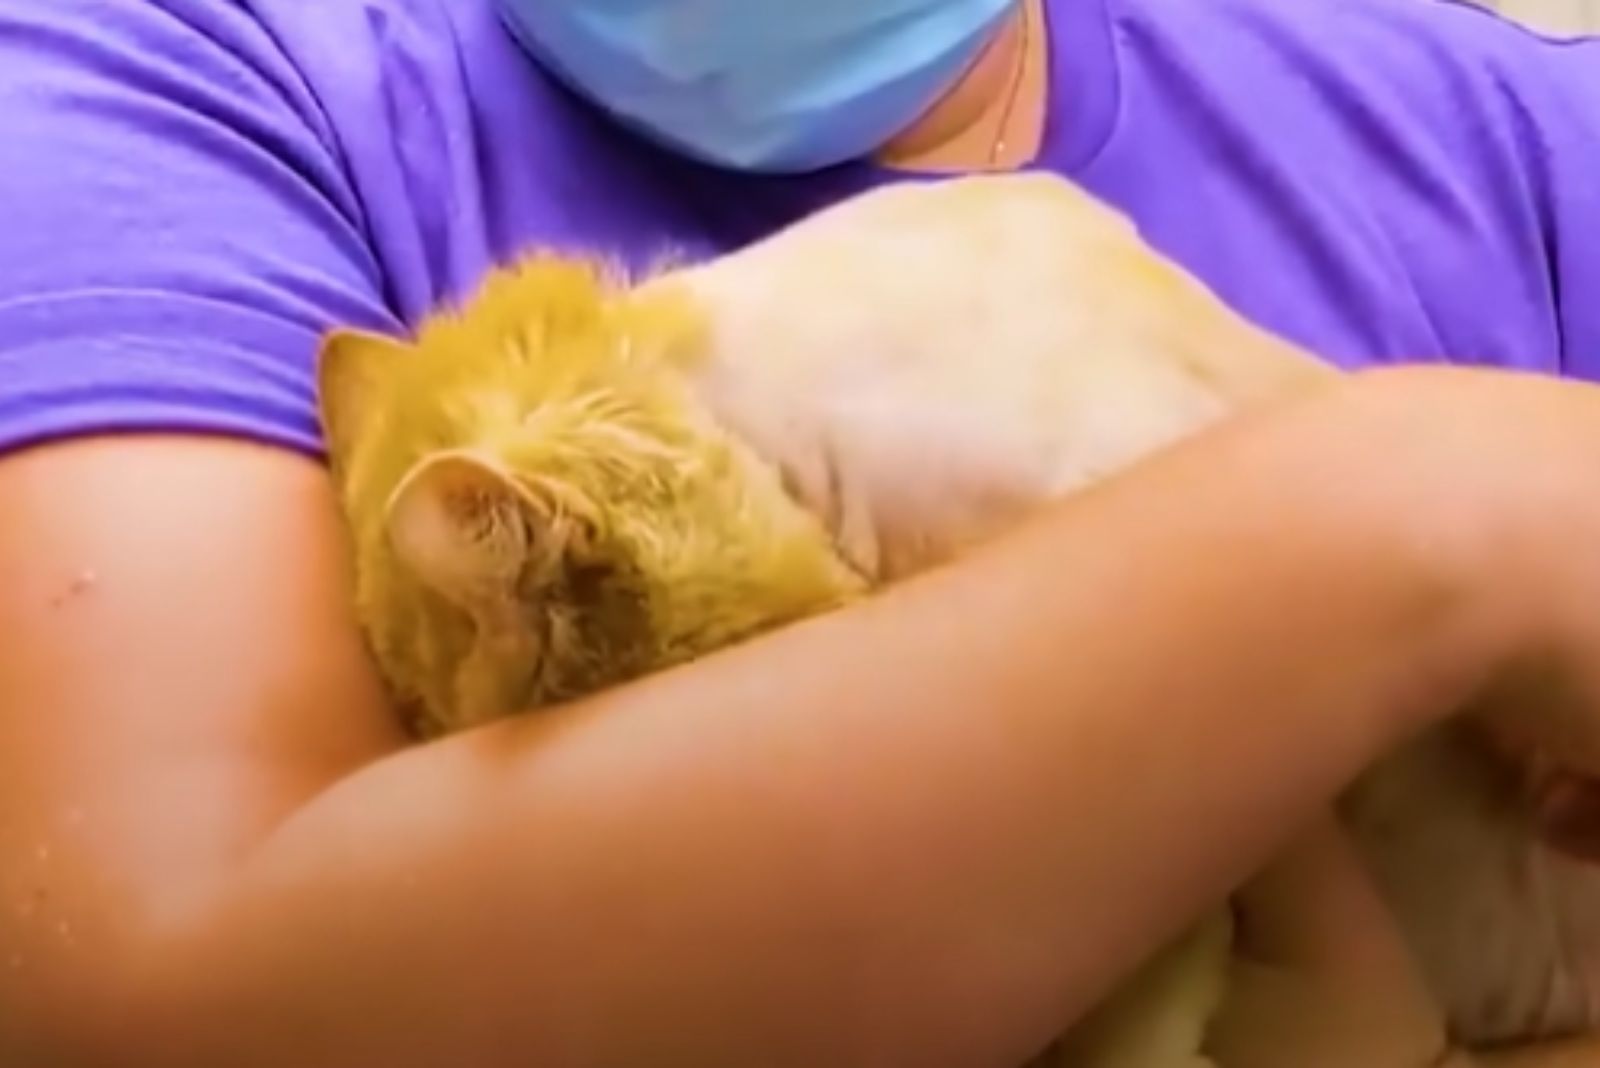 veterinarian holding kitten